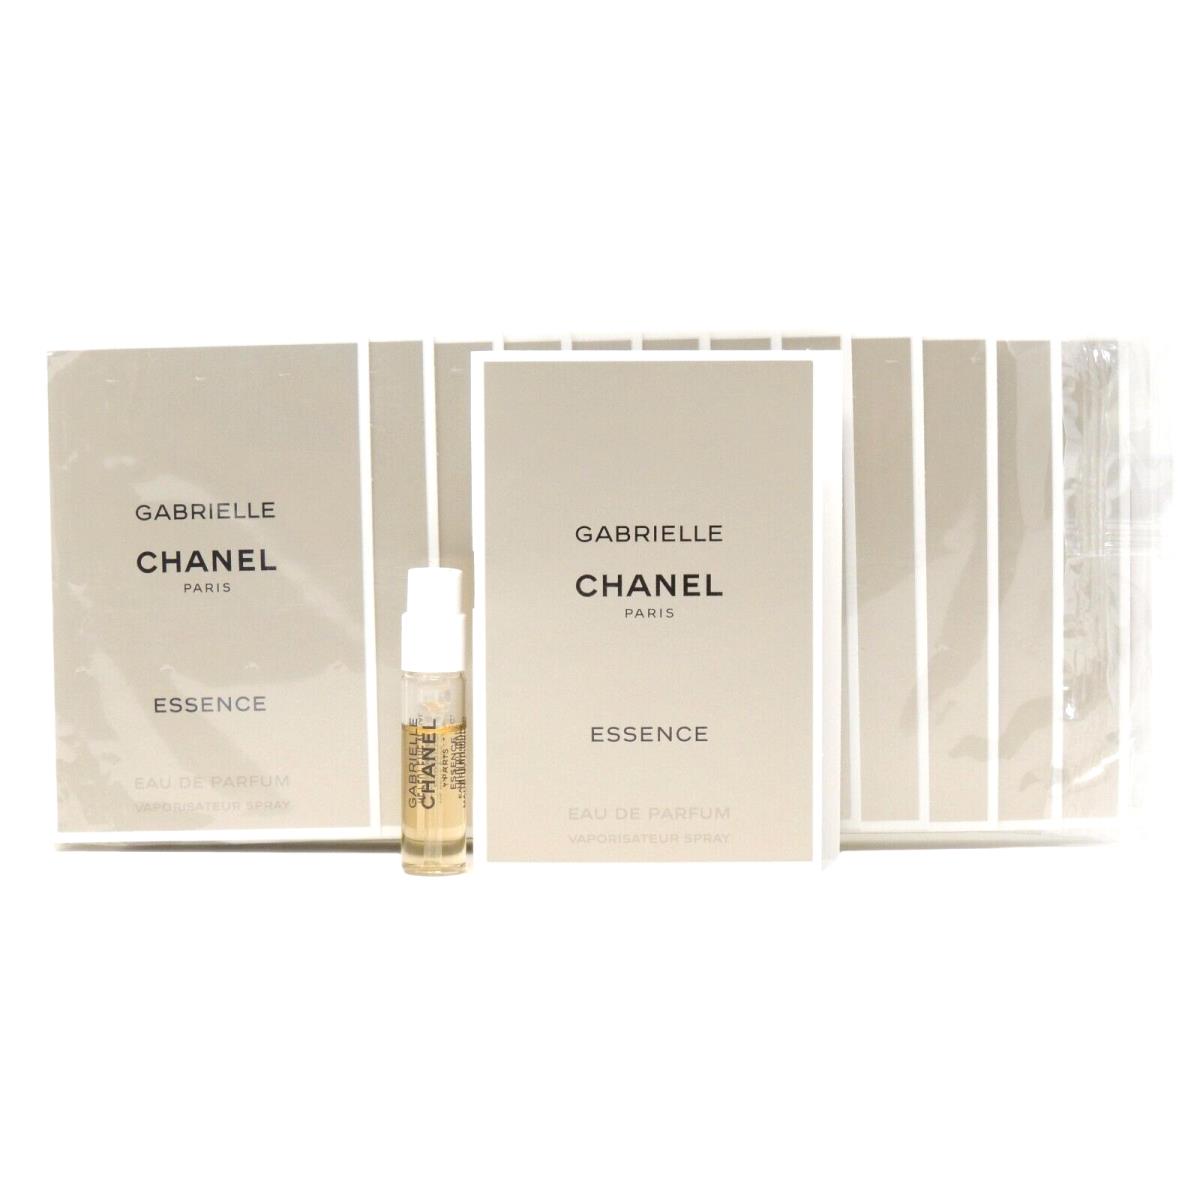 Chanel Gabrielle Essence Edp 1.5ml .05fl oz x 12 Perfume Spray Samples